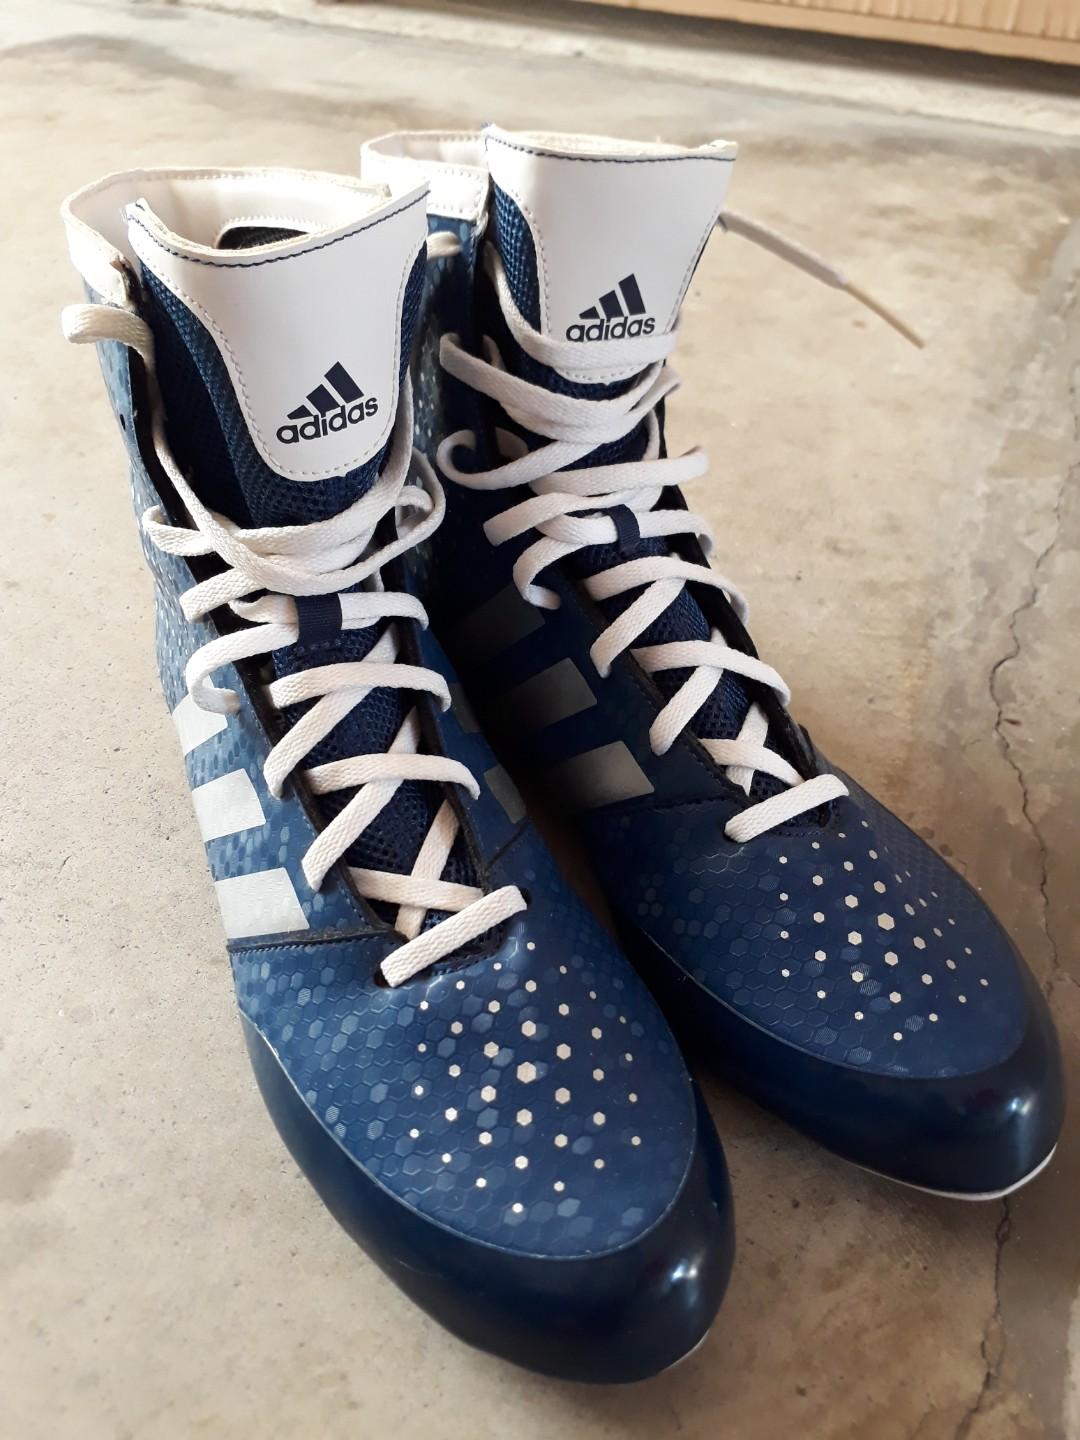 adidas ko legend 16.2 boxing shoes